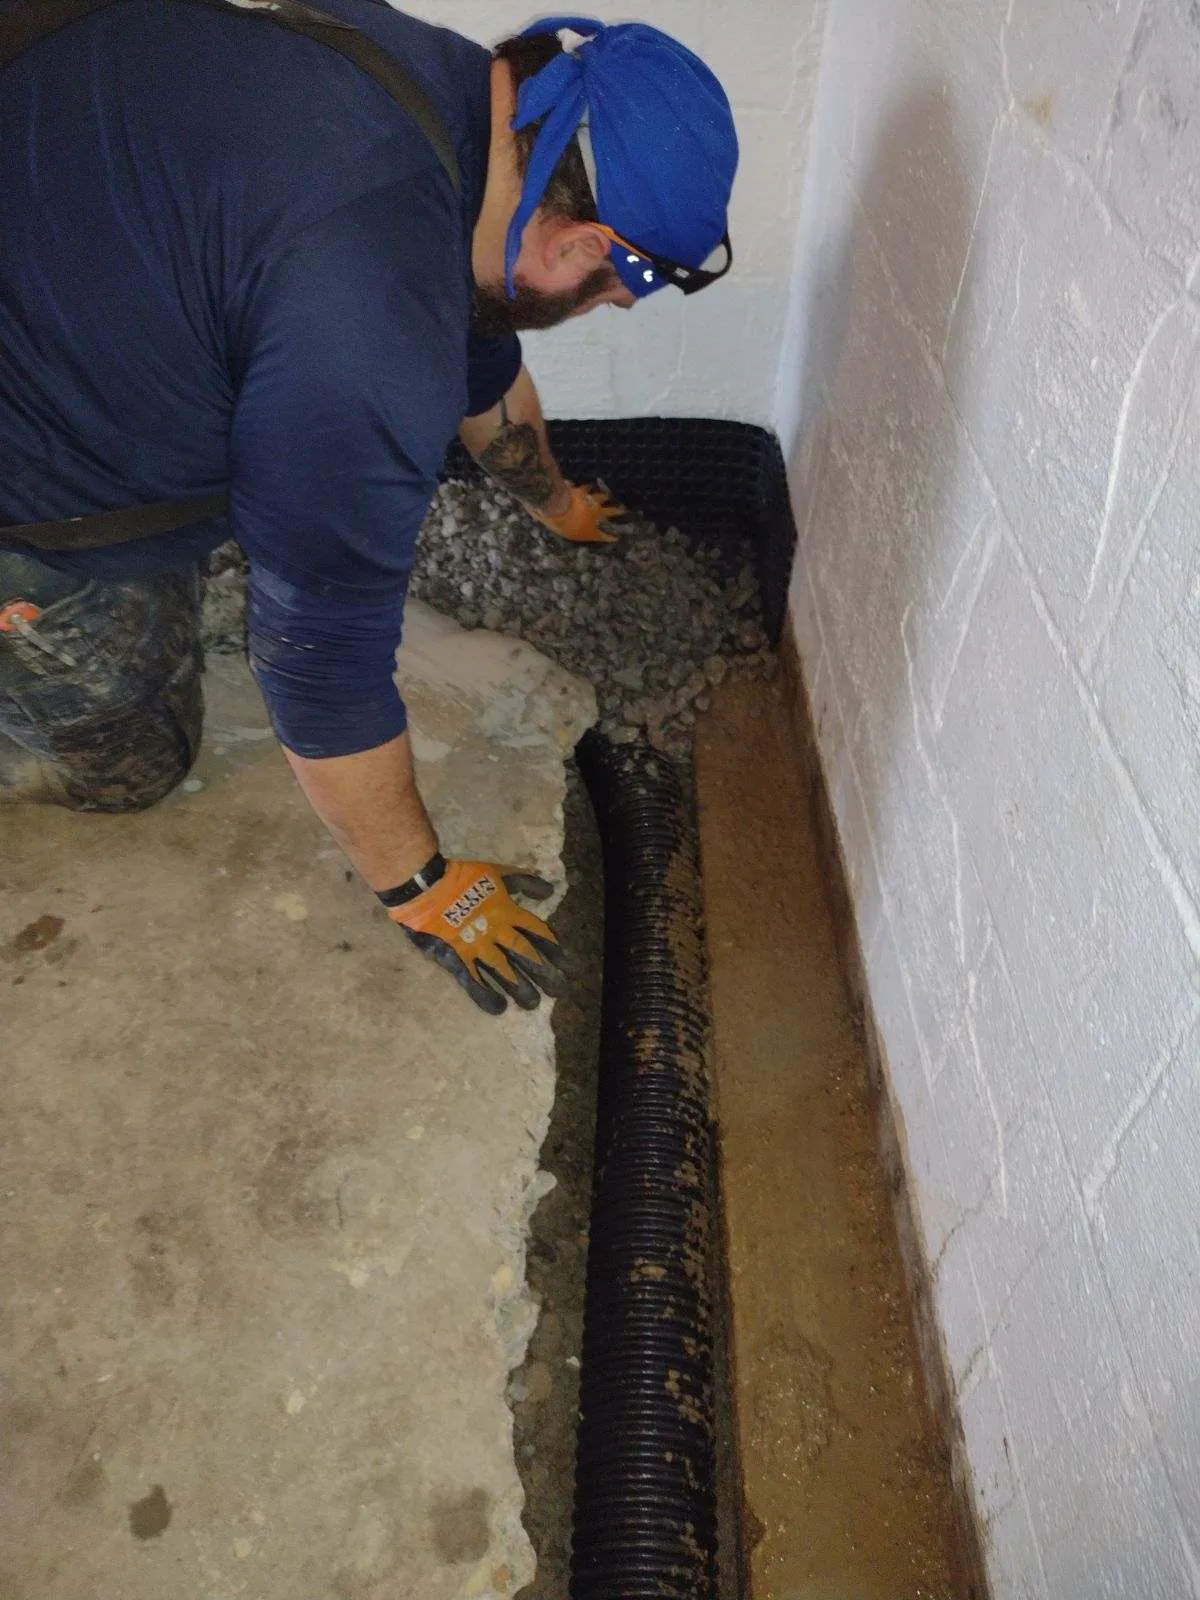 AquaGuard employee skillfully waterproofing a basement